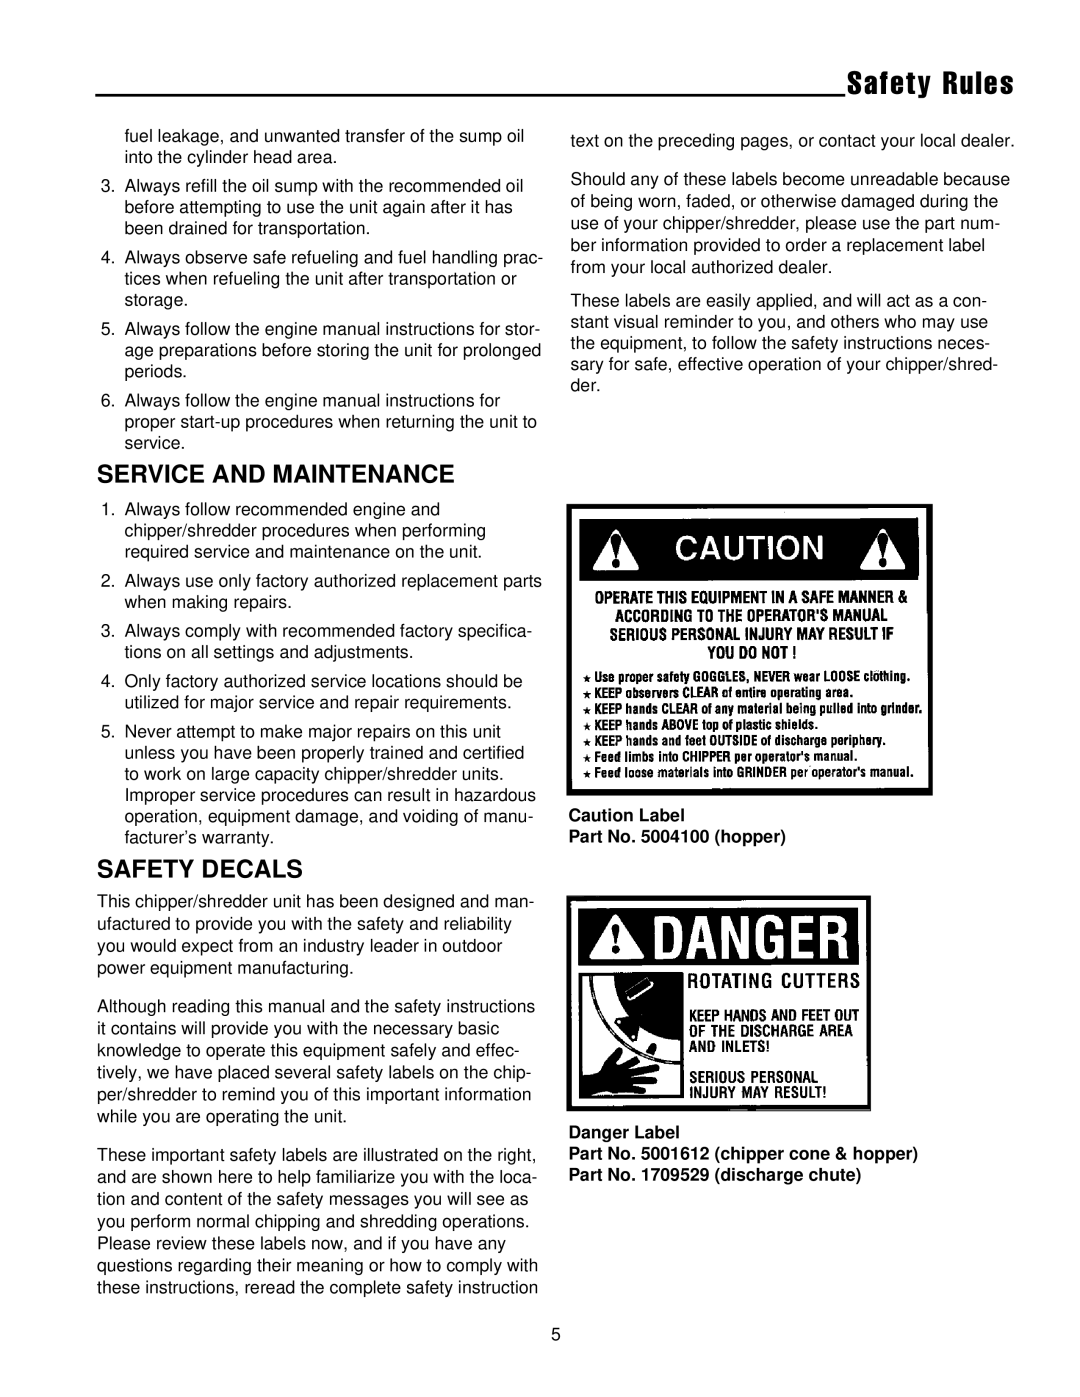 Snapper SAC55140BV, 5/14, 8/14 Service And Maintenance, Safety Decals, Caution Label Part No. 5004100 hopper Danger Label 